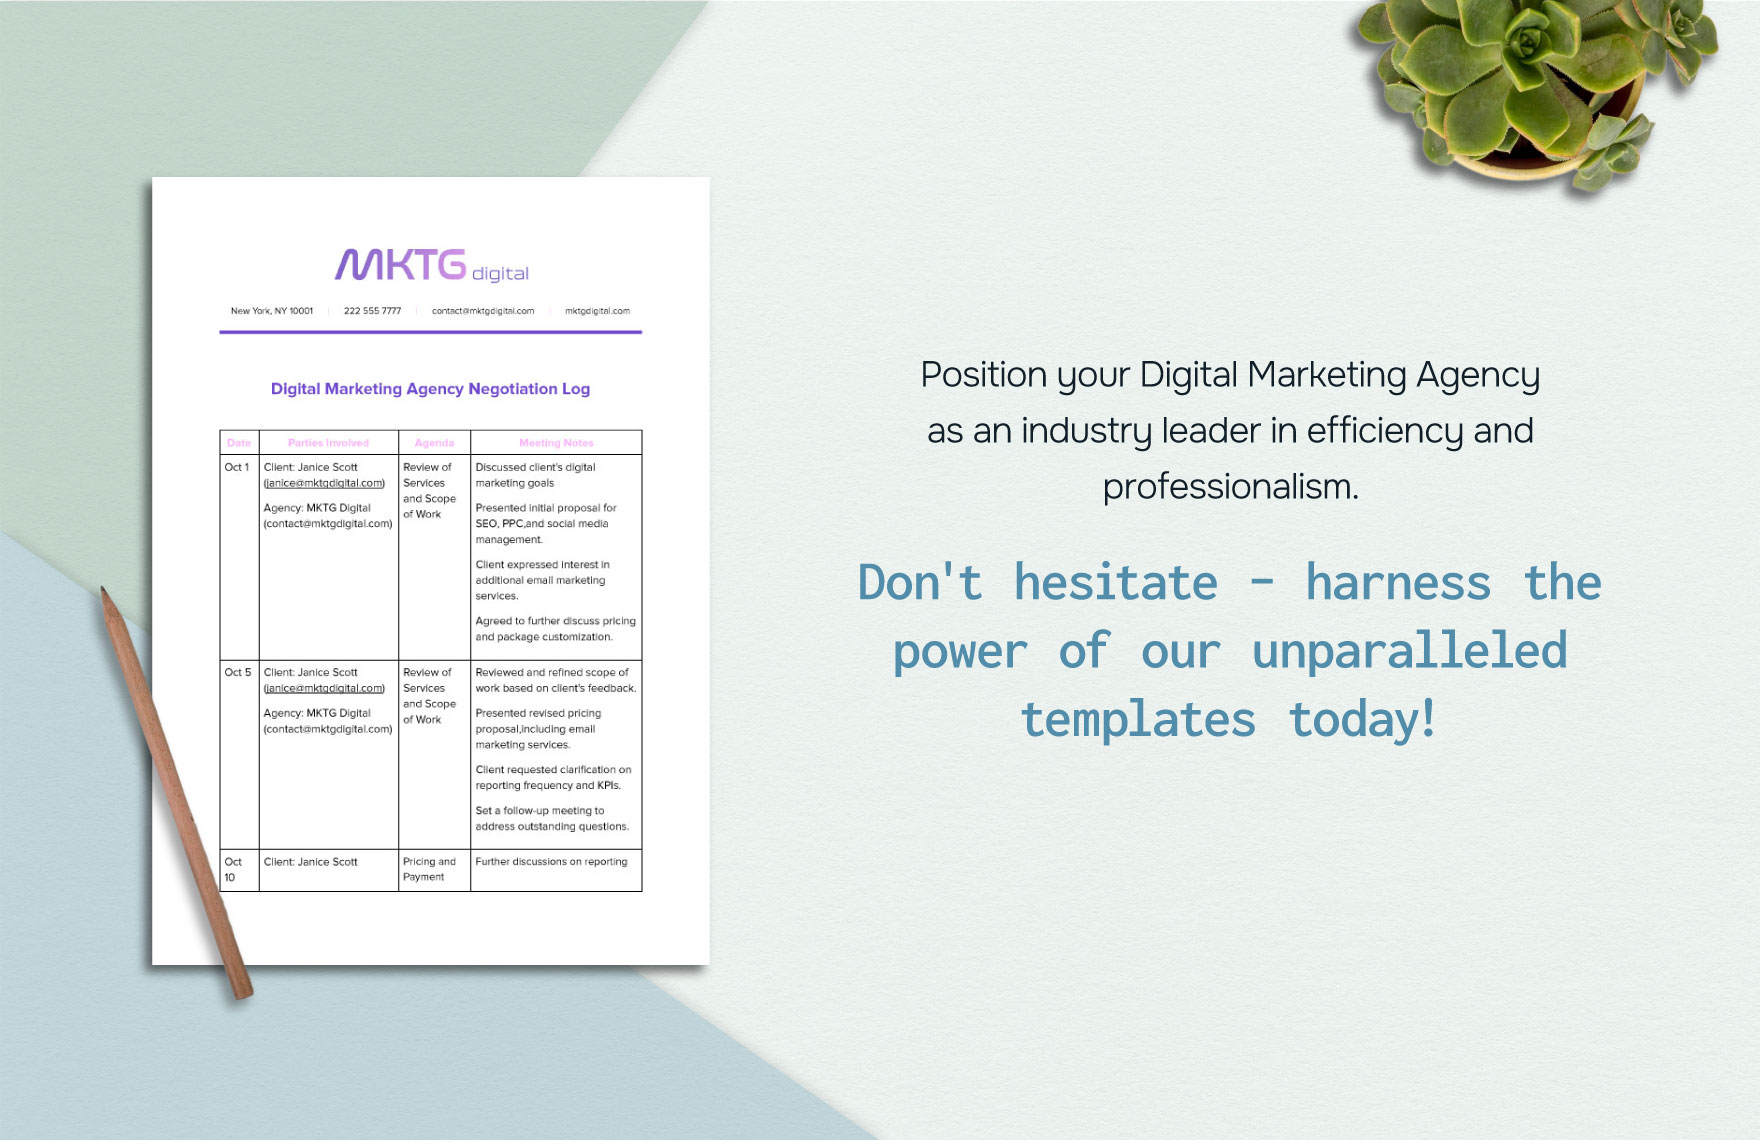 Digital Marketing Agency Negotiation Log Template